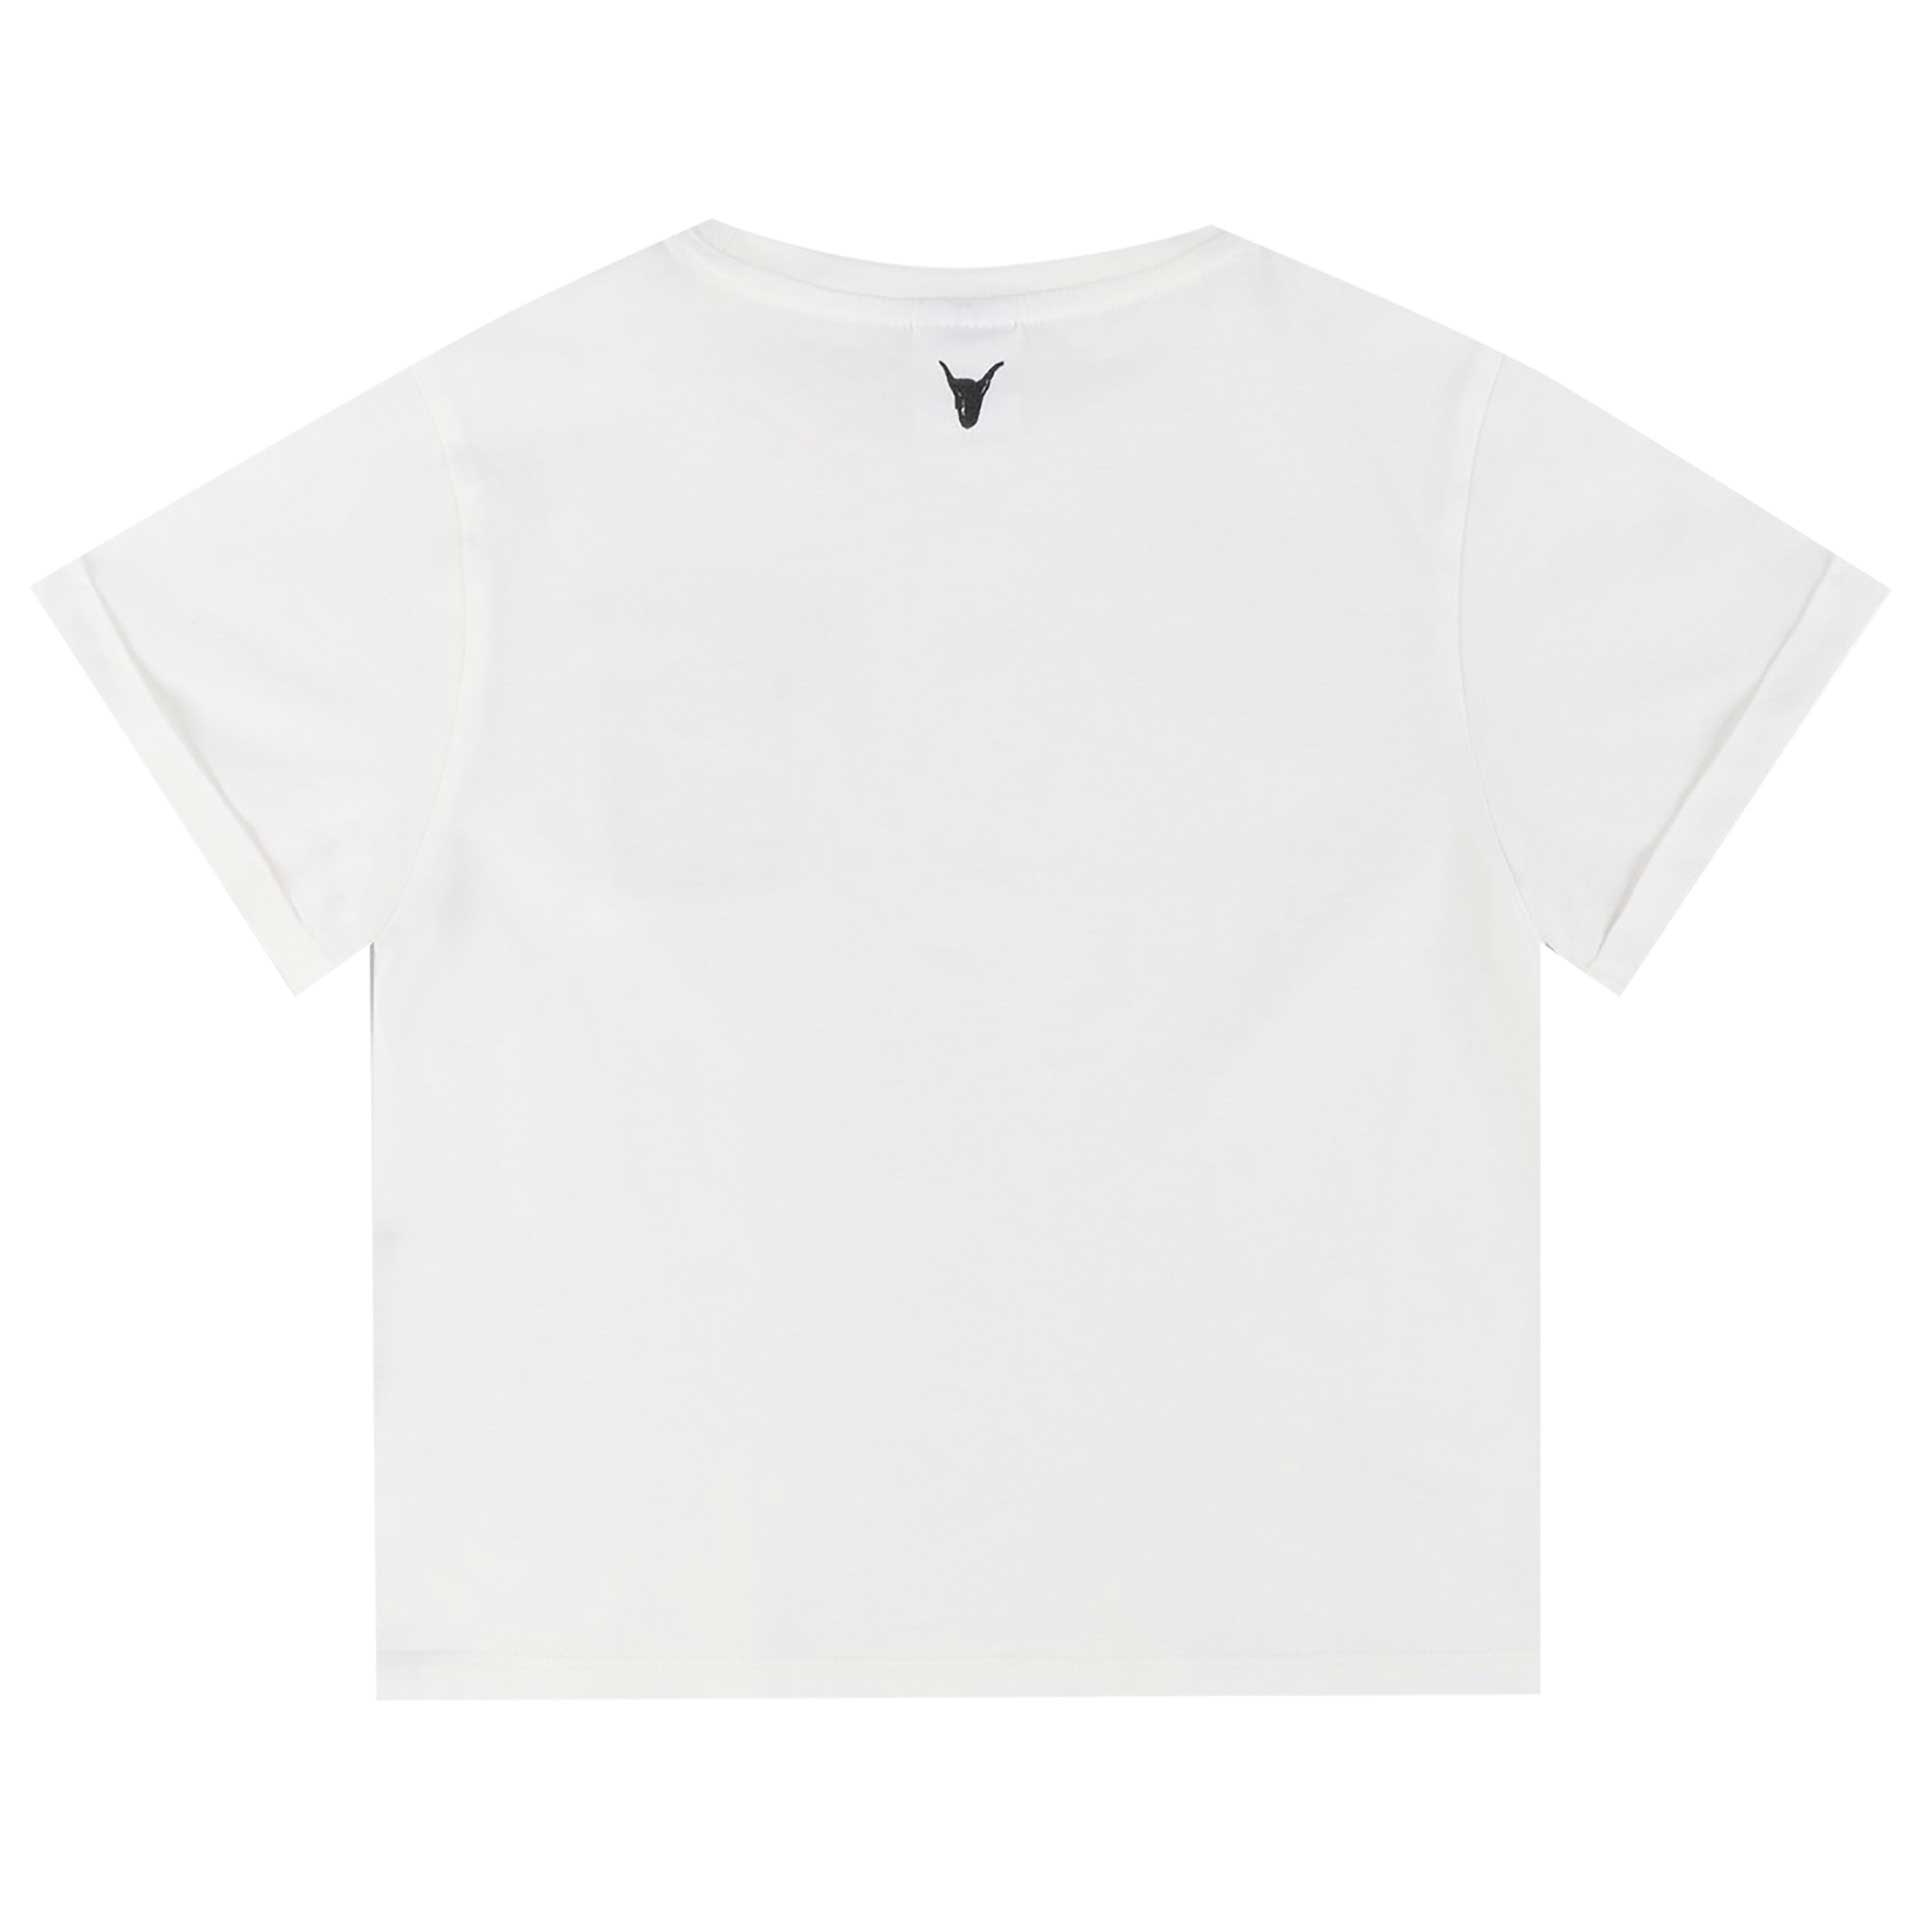 Alix T-Shirt chest pocket 2